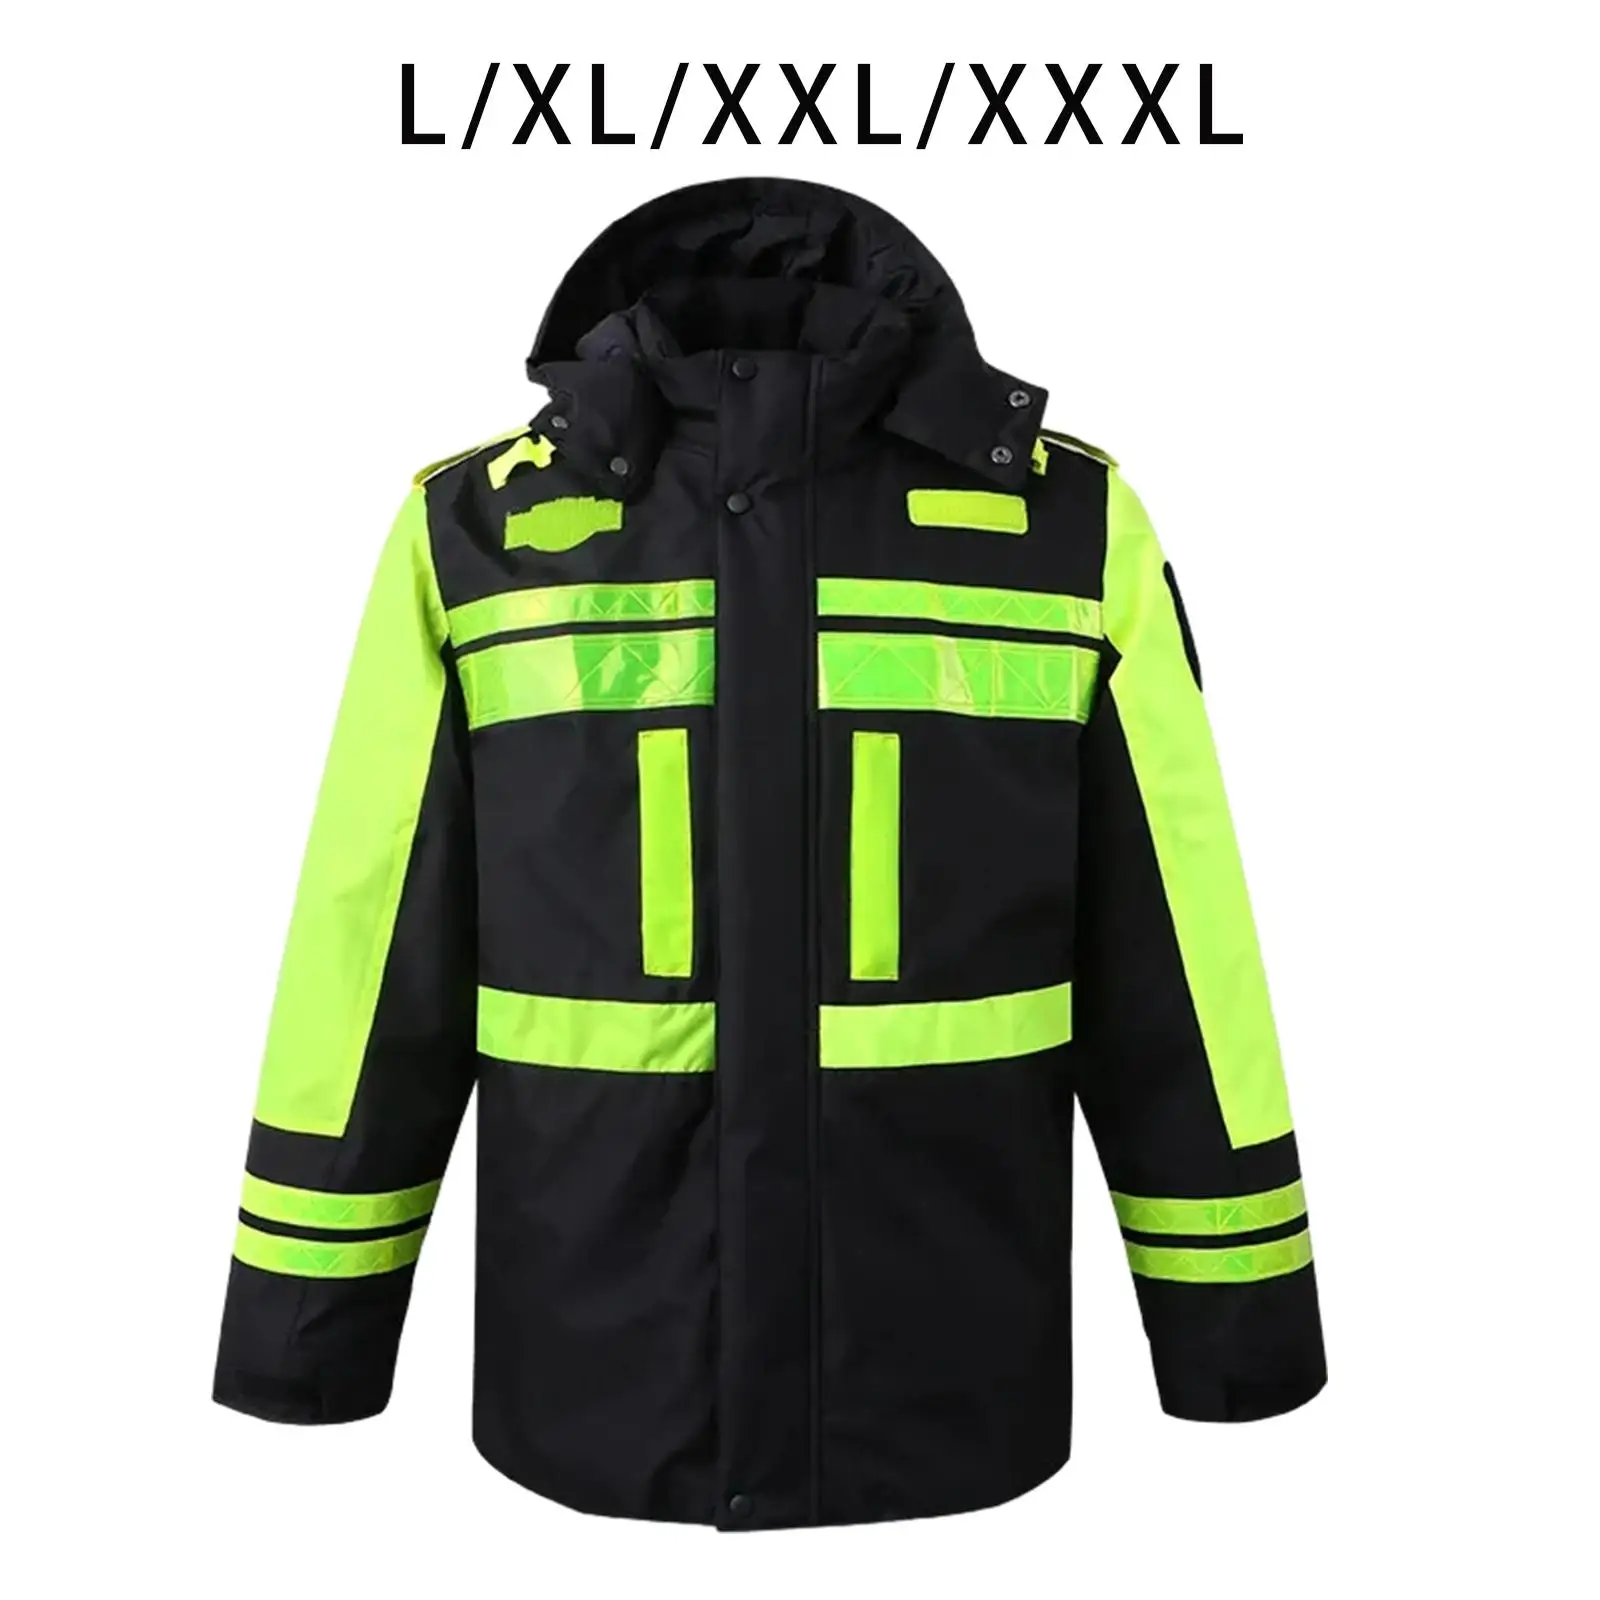 Winter Safety Jacket Rain Coat Warm Detachable Liner Reflective Work Jacket Construction Coat for Construction Cycling Bike